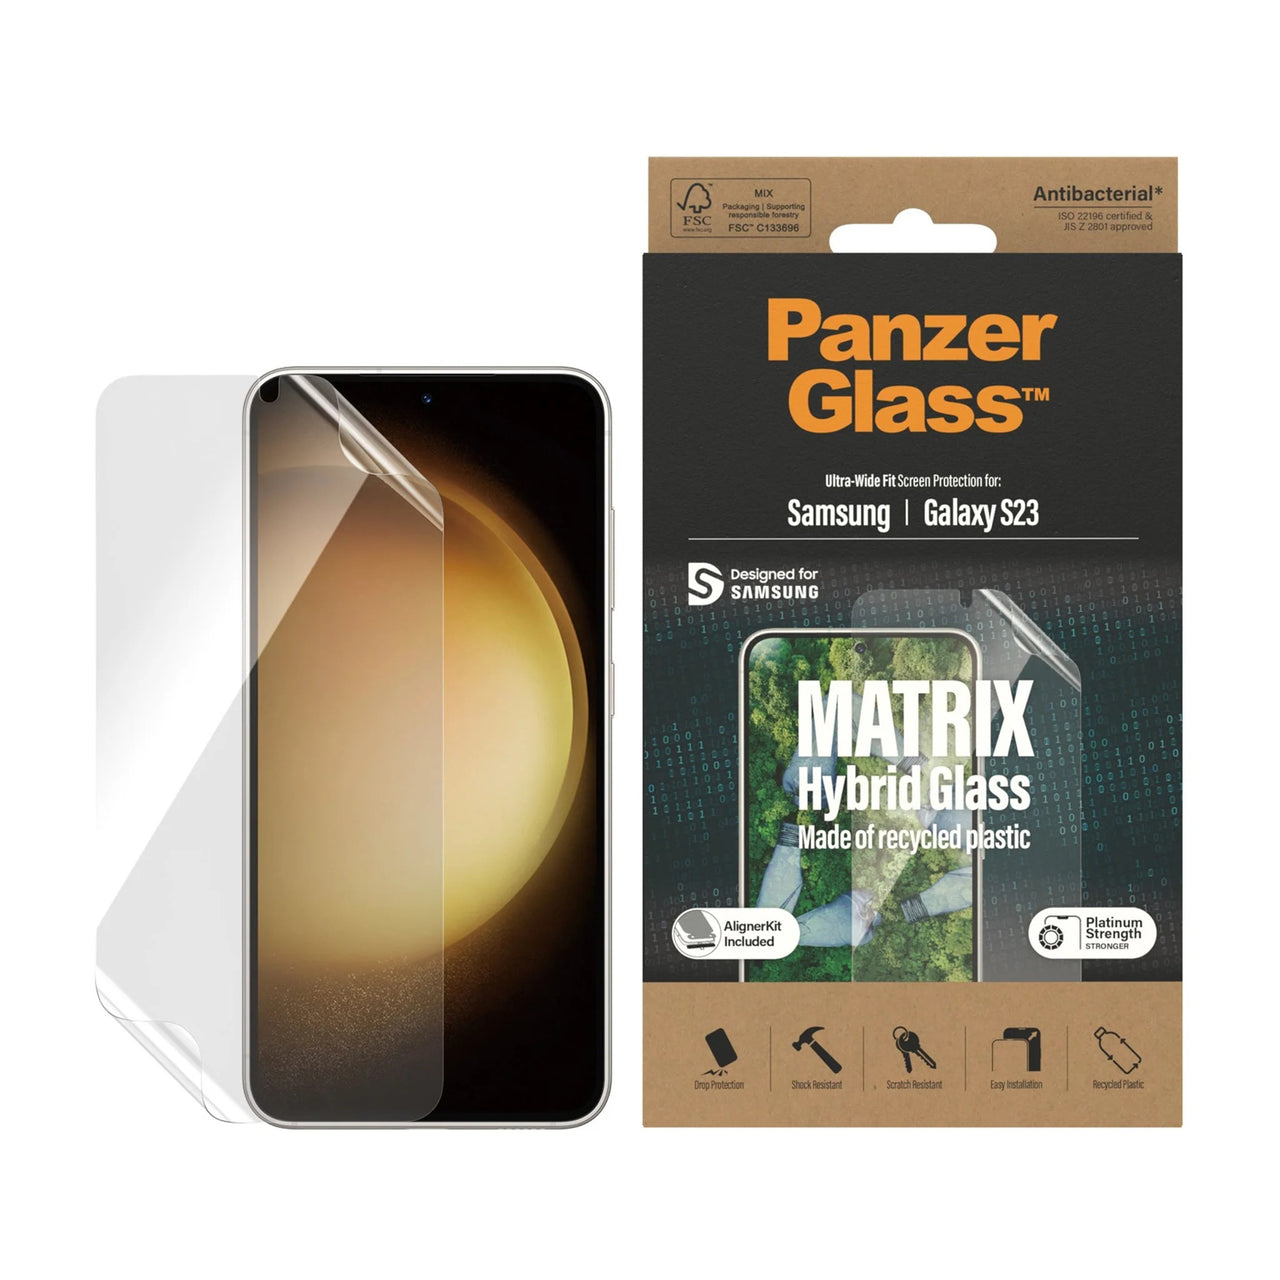 PanzerGlass Matrix Hybrid Screen FILM Protector for S23 - Ultra Wide Fit